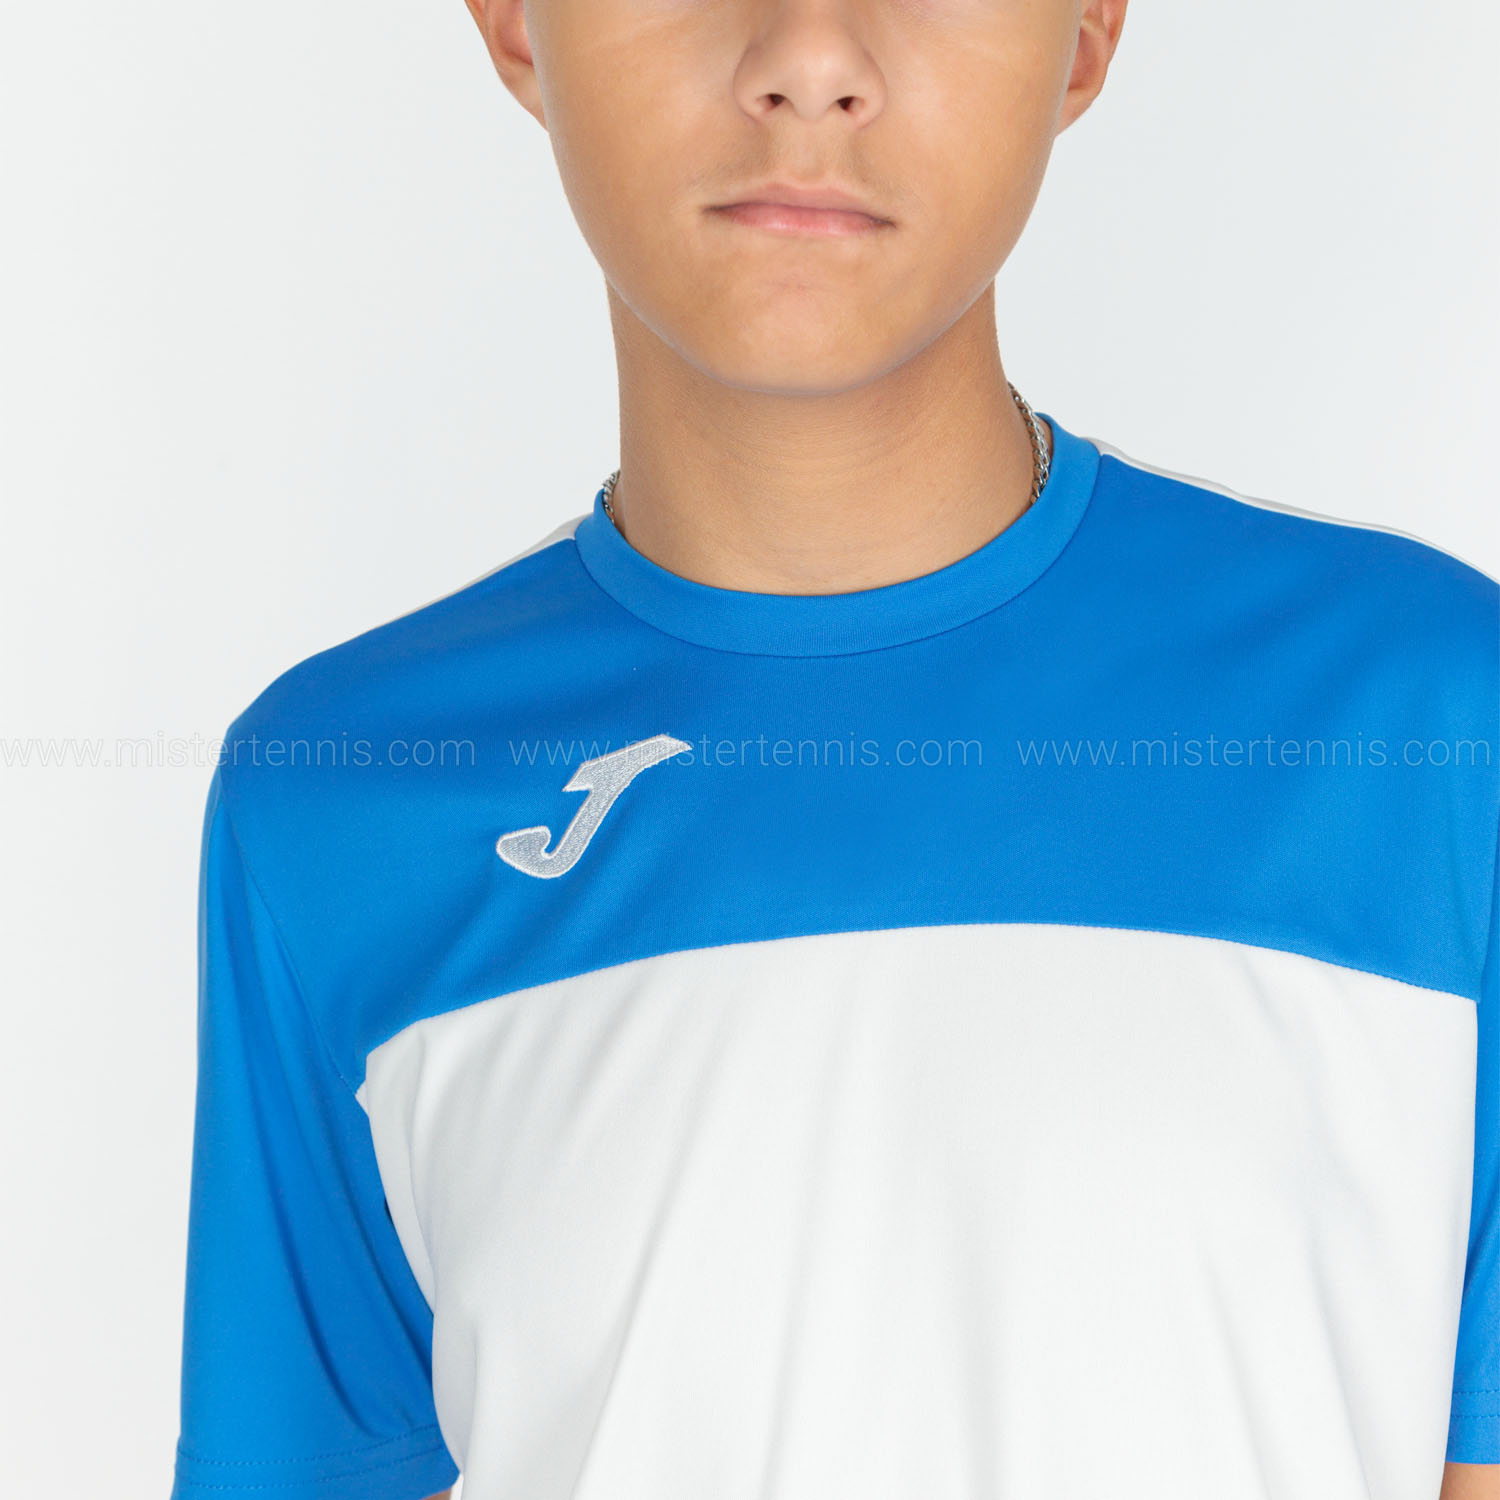 Joma Winner Camiseta Niño - White/Blue